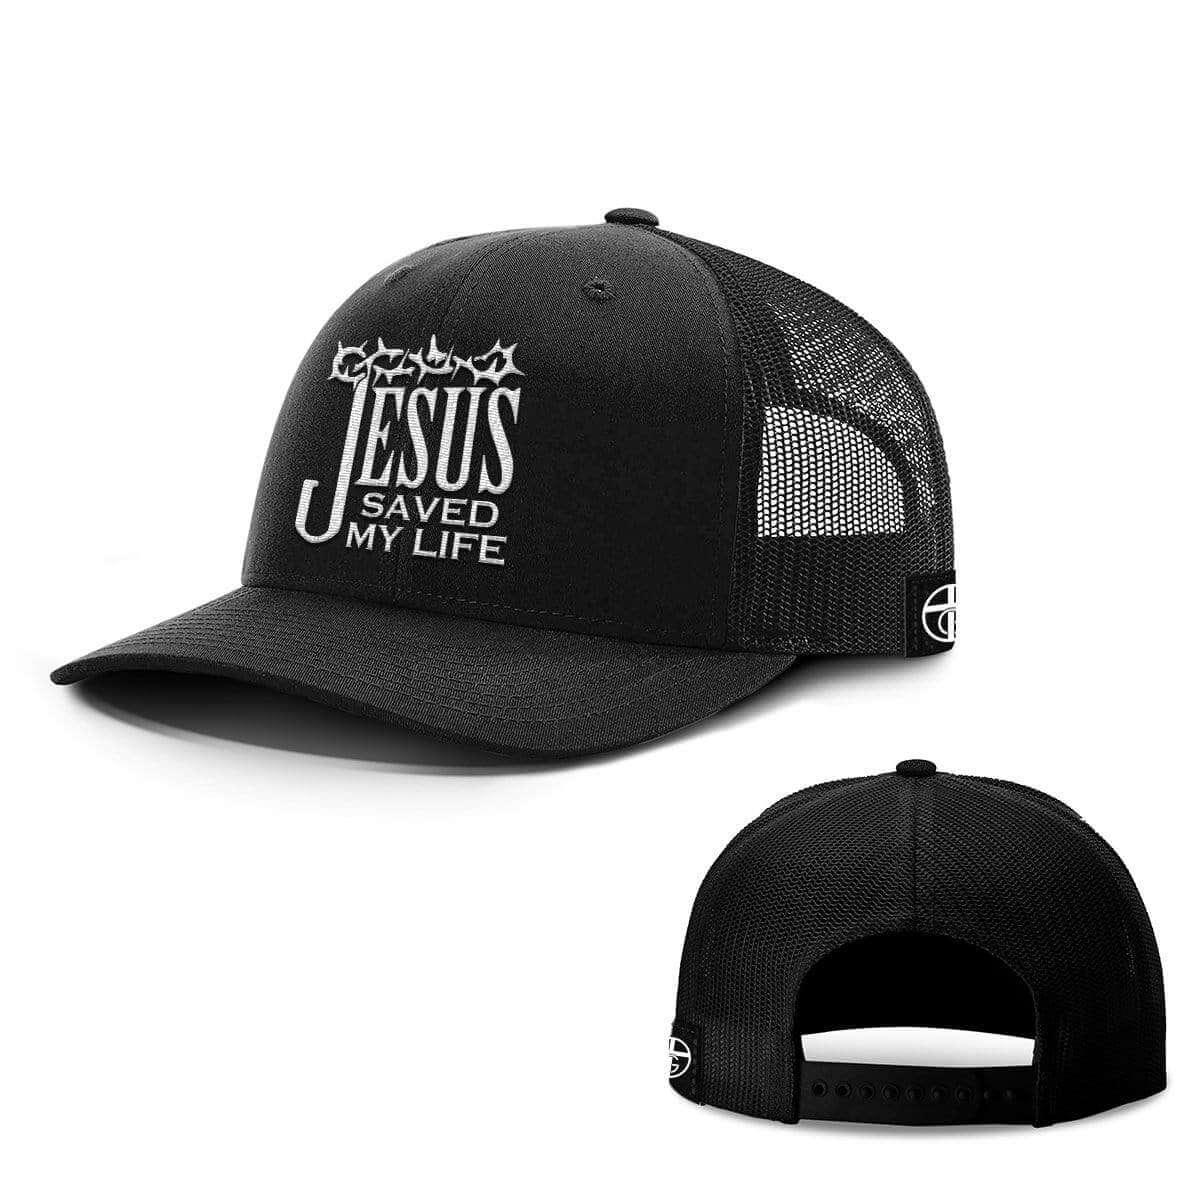 Jesus Saved My Life Hats